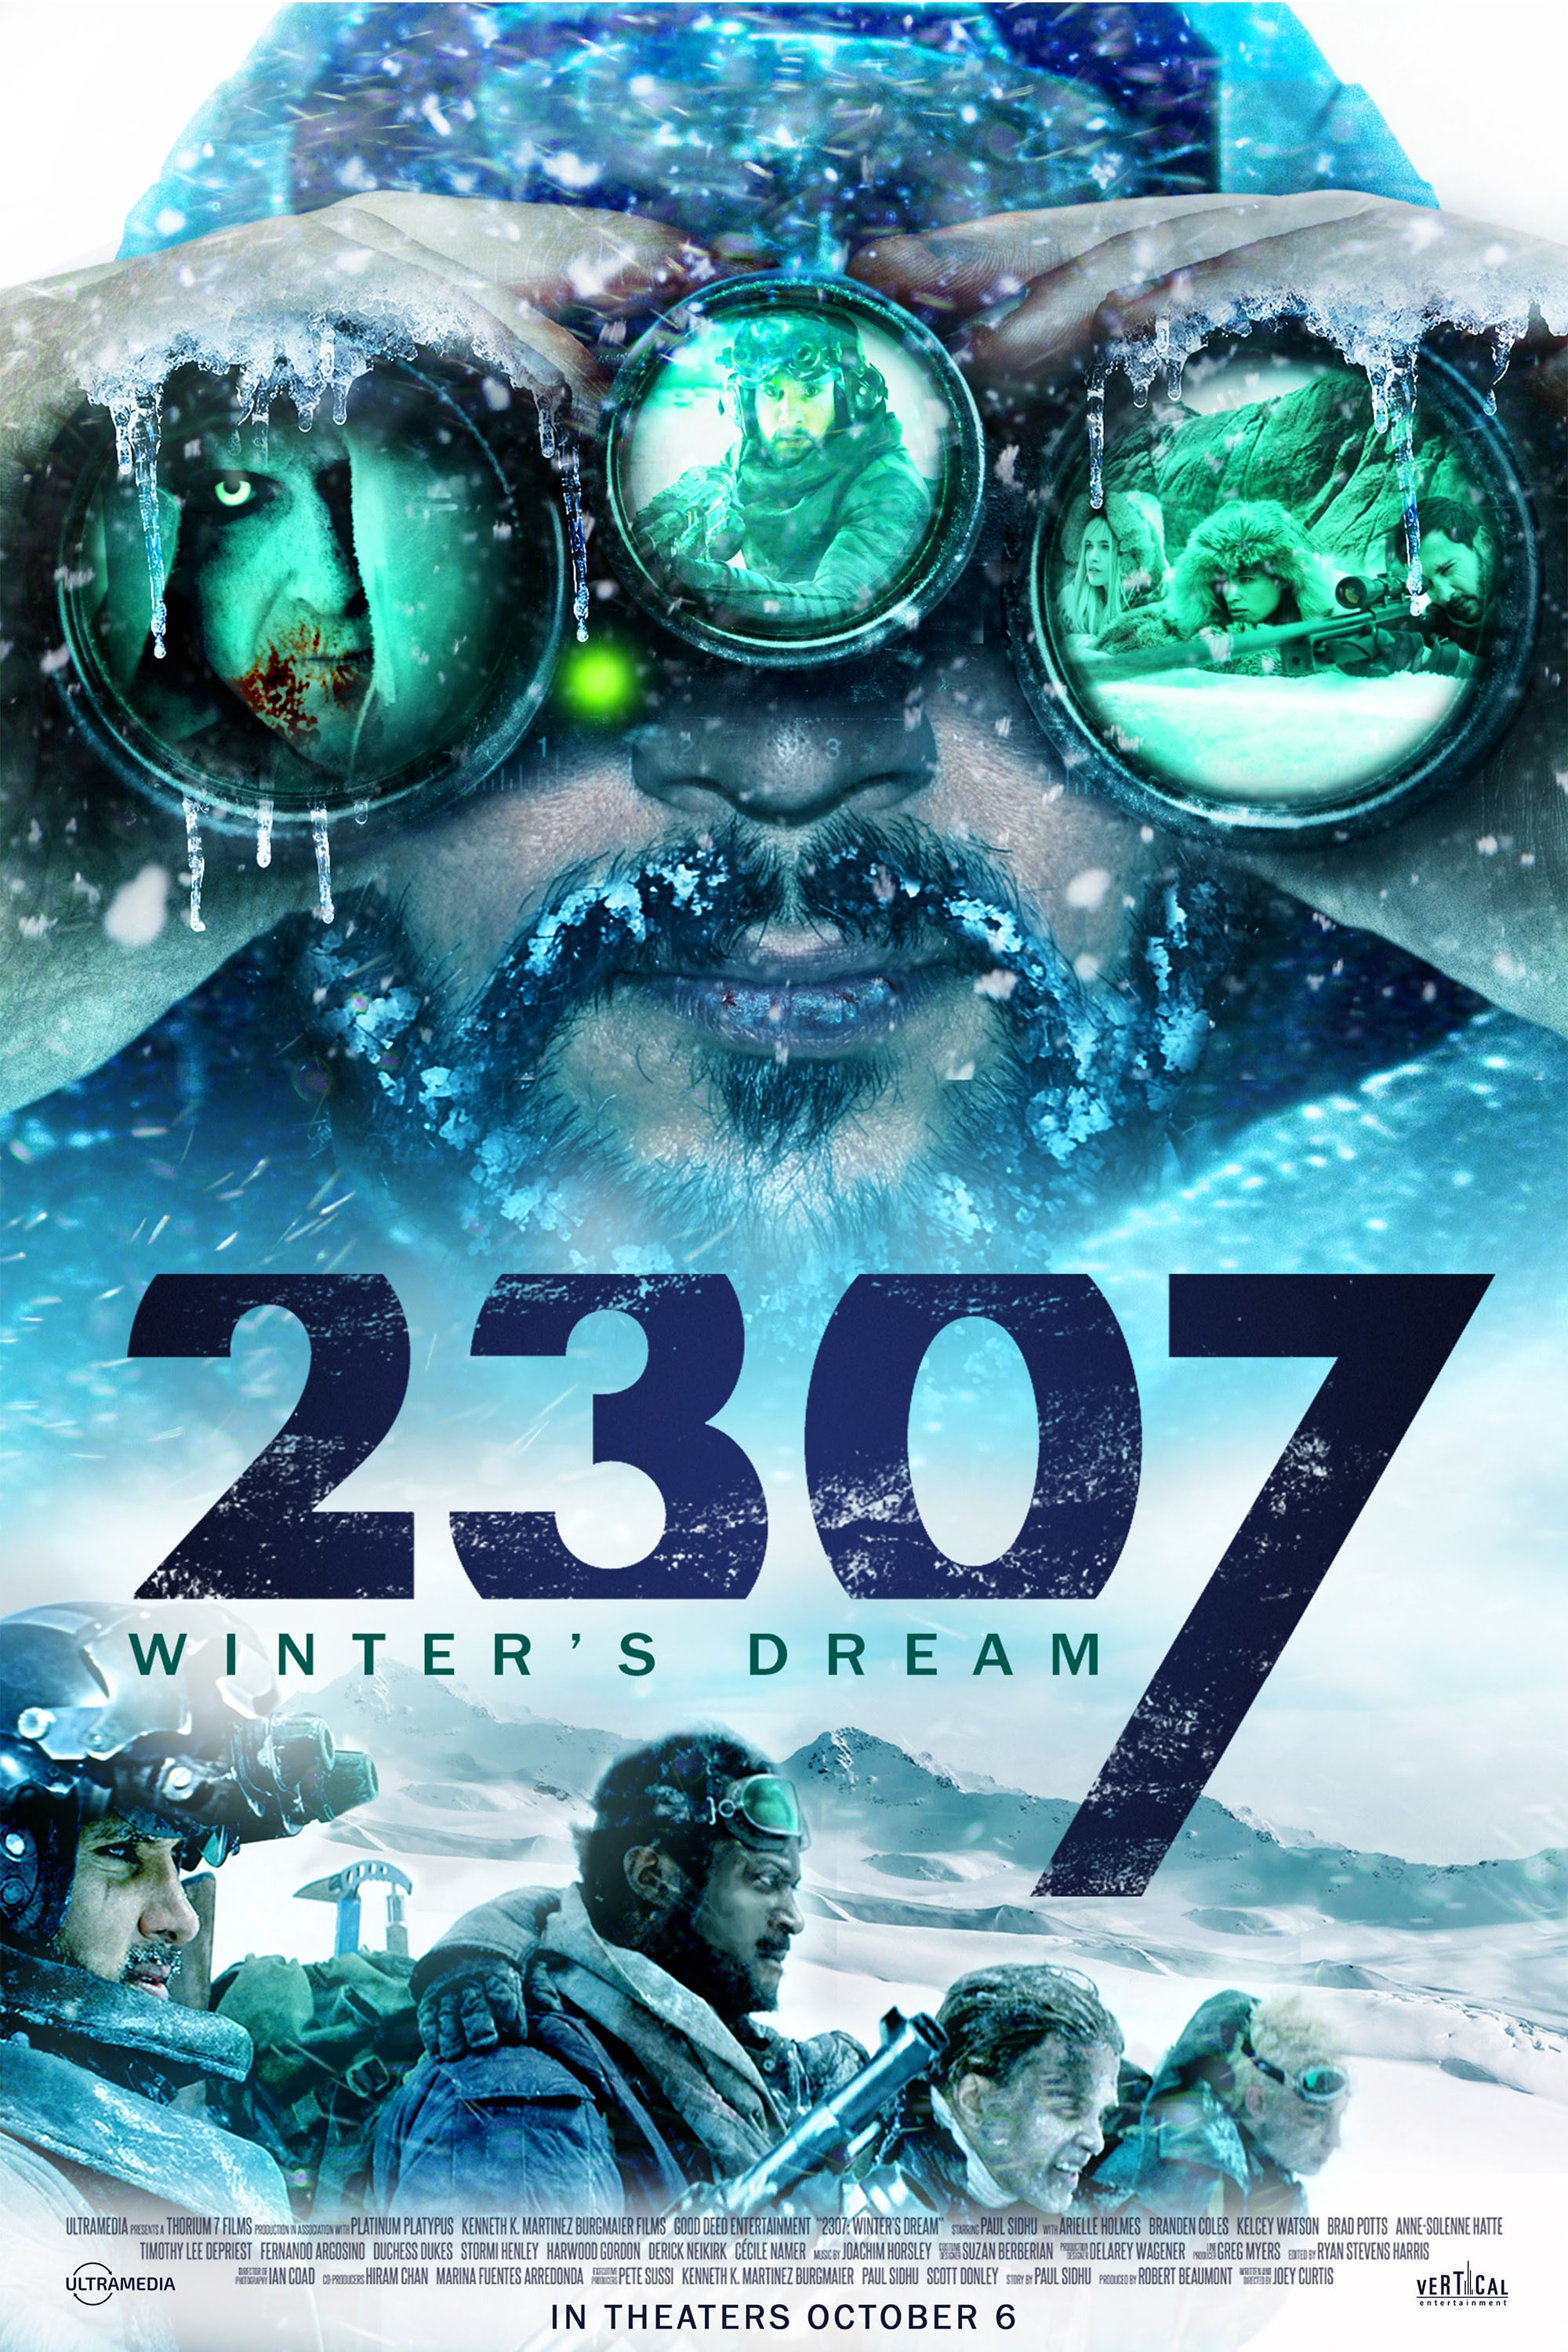 2307: Winter's Dream (2016) Screenshot 2